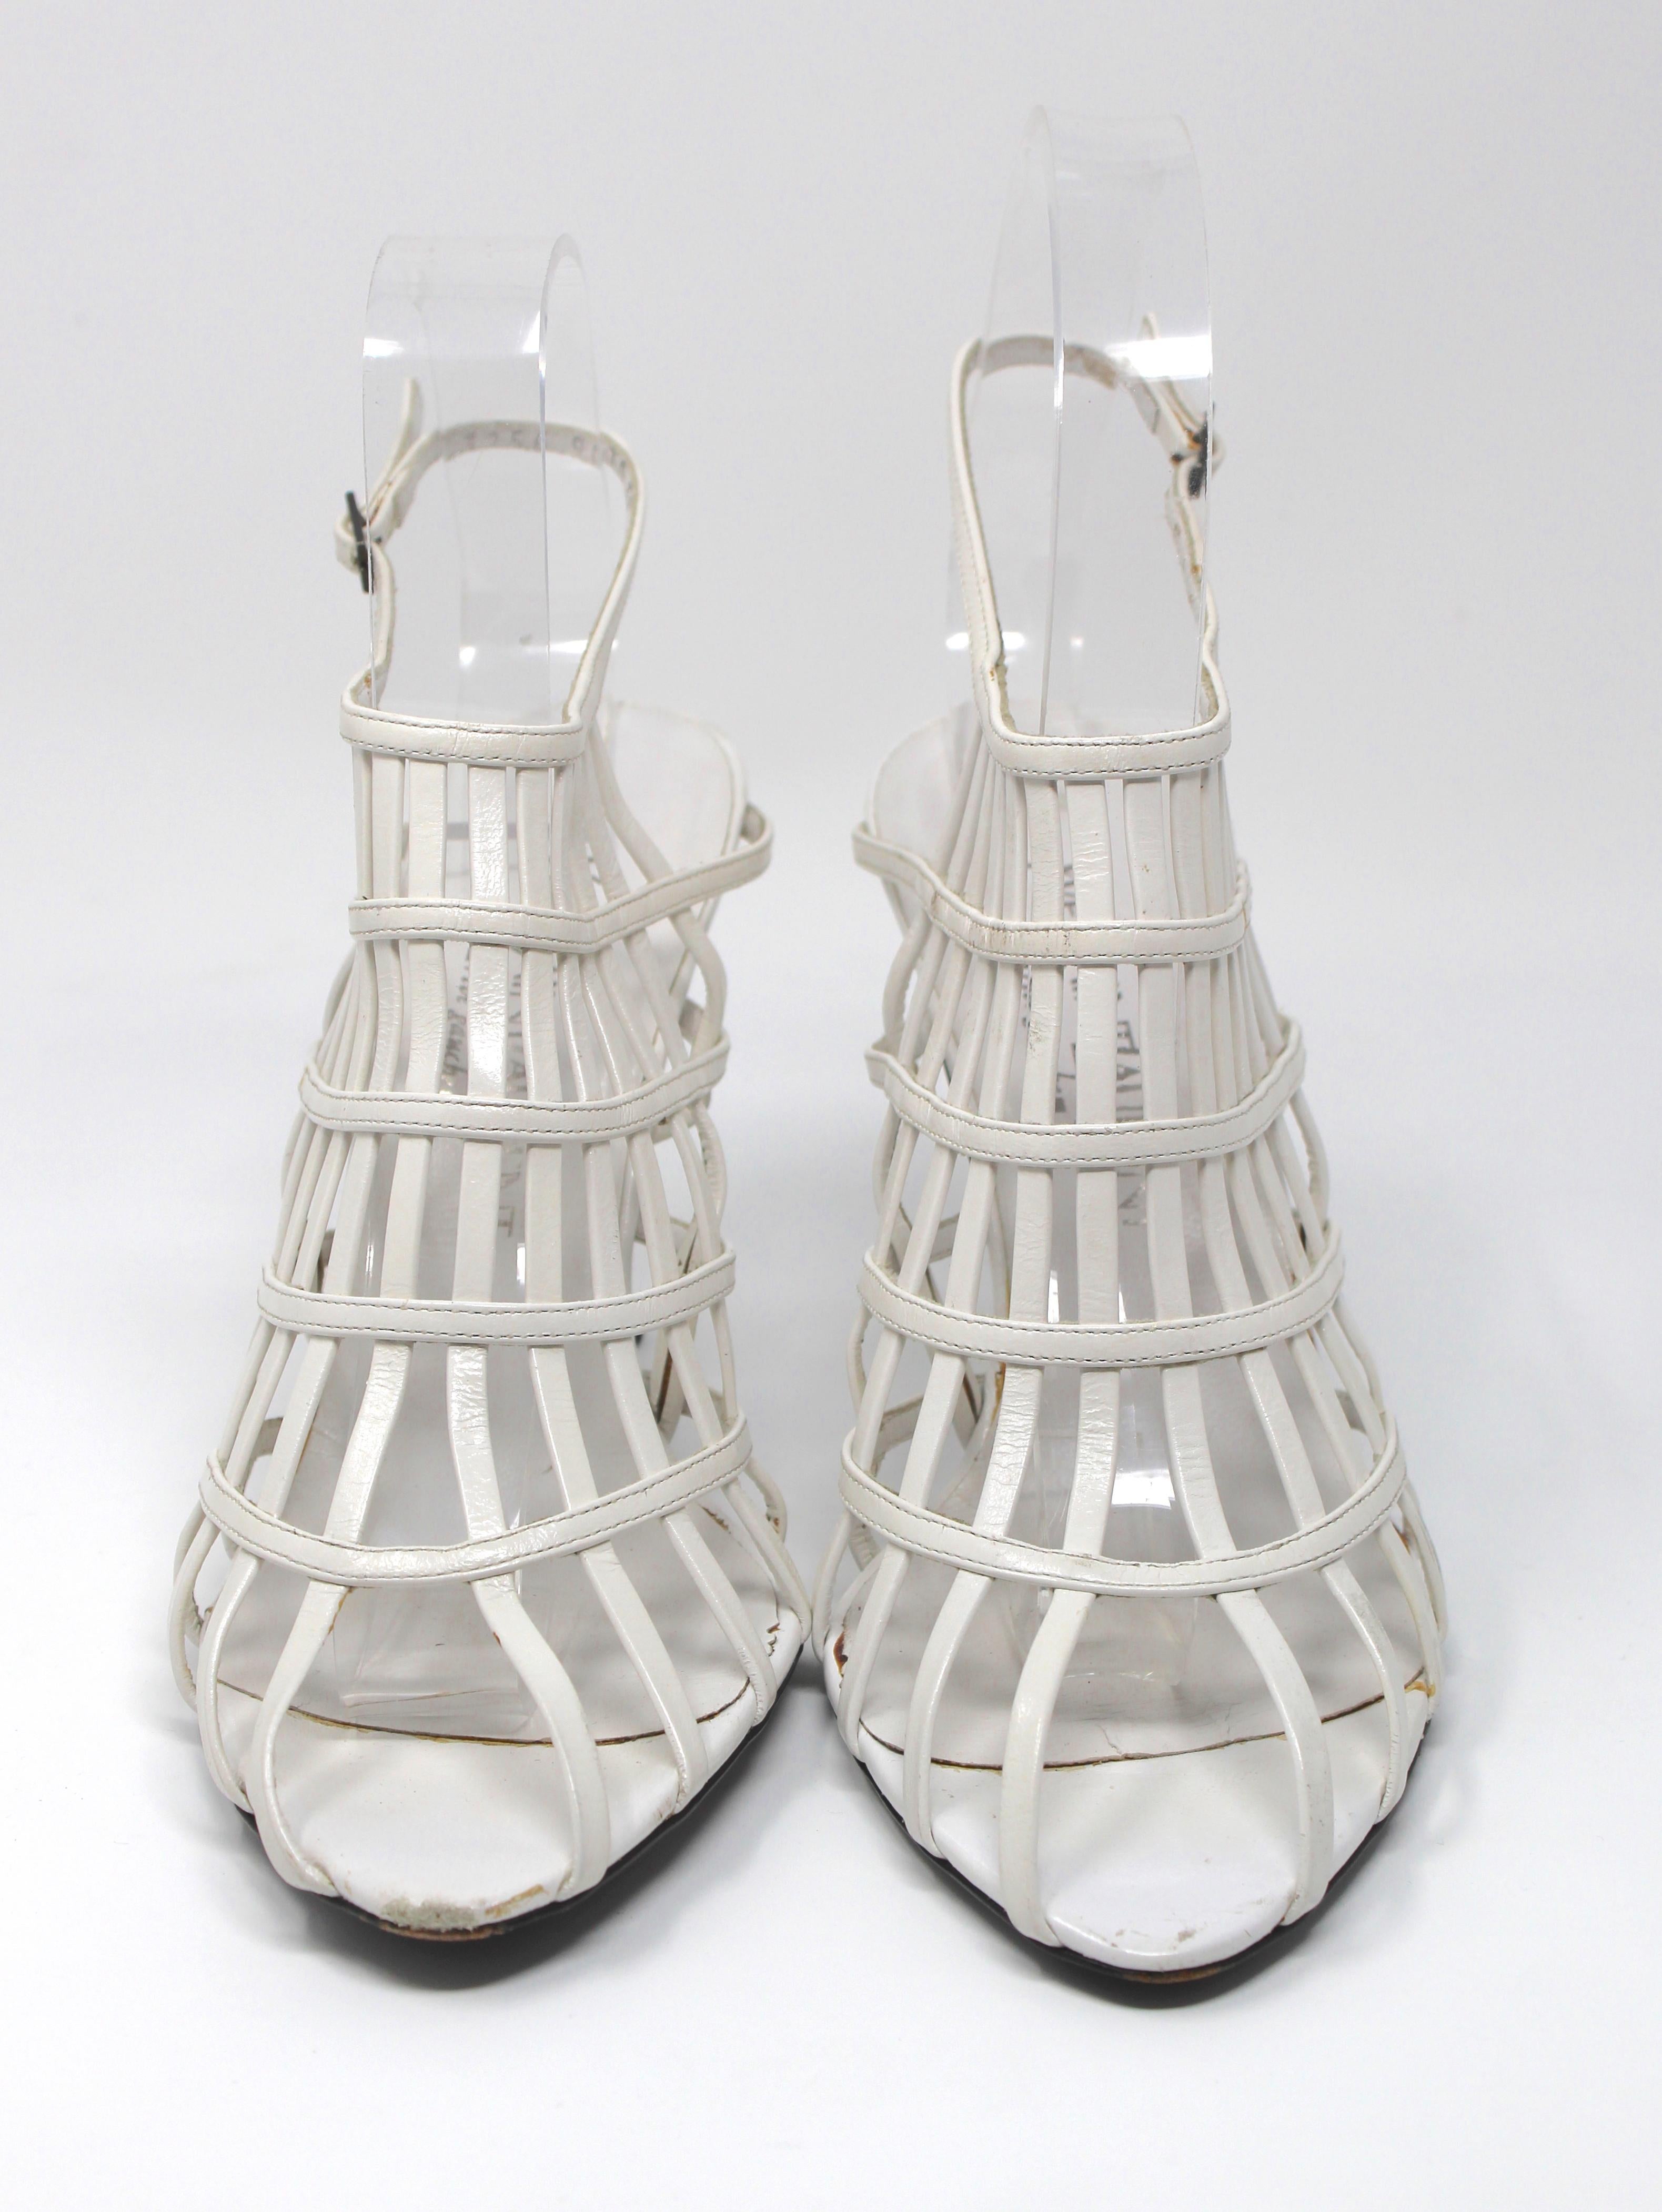 Yves Saint Laurent White Leather Strap Heels, Size 8 US / 38 EU, c. 2000's 6